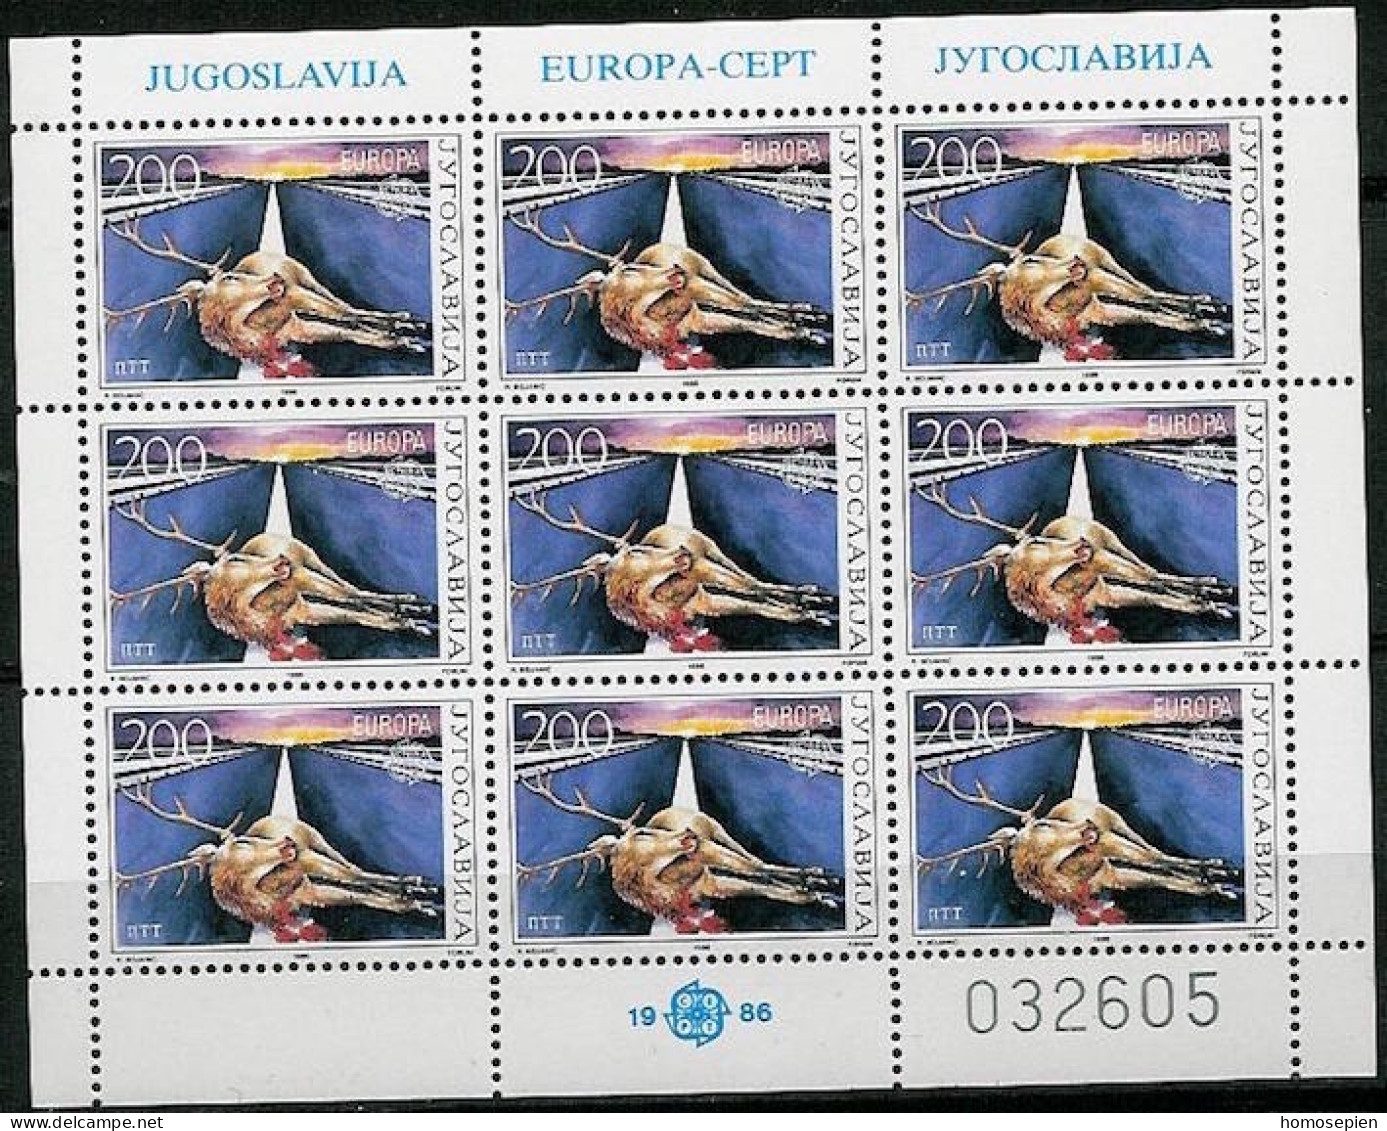 Yougoslavie - Jugoslawien - Yugoslavia Bloc Feuillet 1986 Y&T N°F2033 à F2034 - Michel N°KB2156 à KB2157 *** - EUROPA - Blocks & Kleinbögen